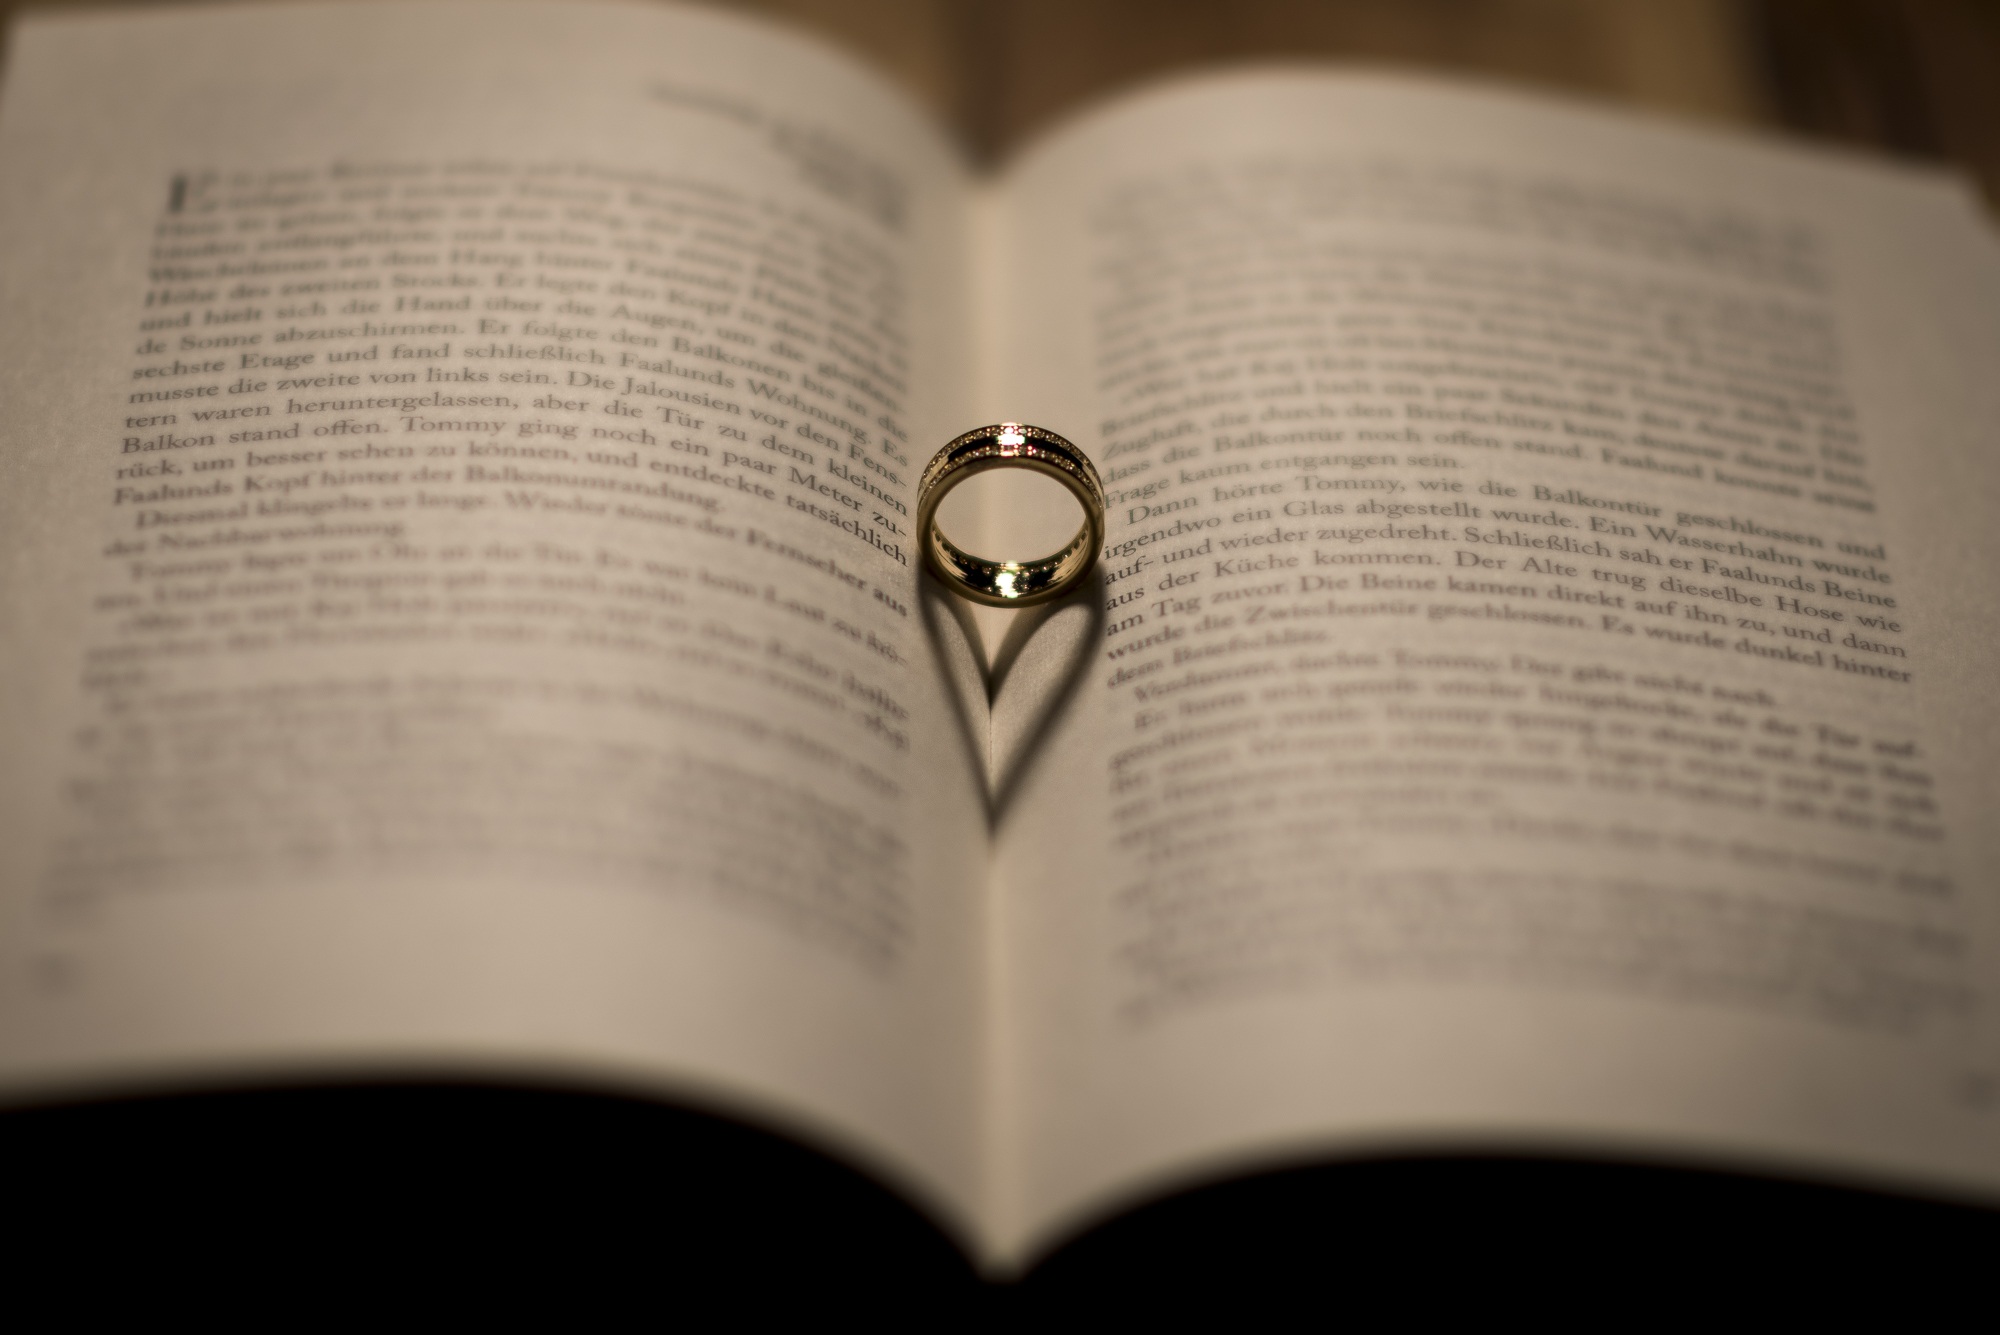 man made, book, love, ring